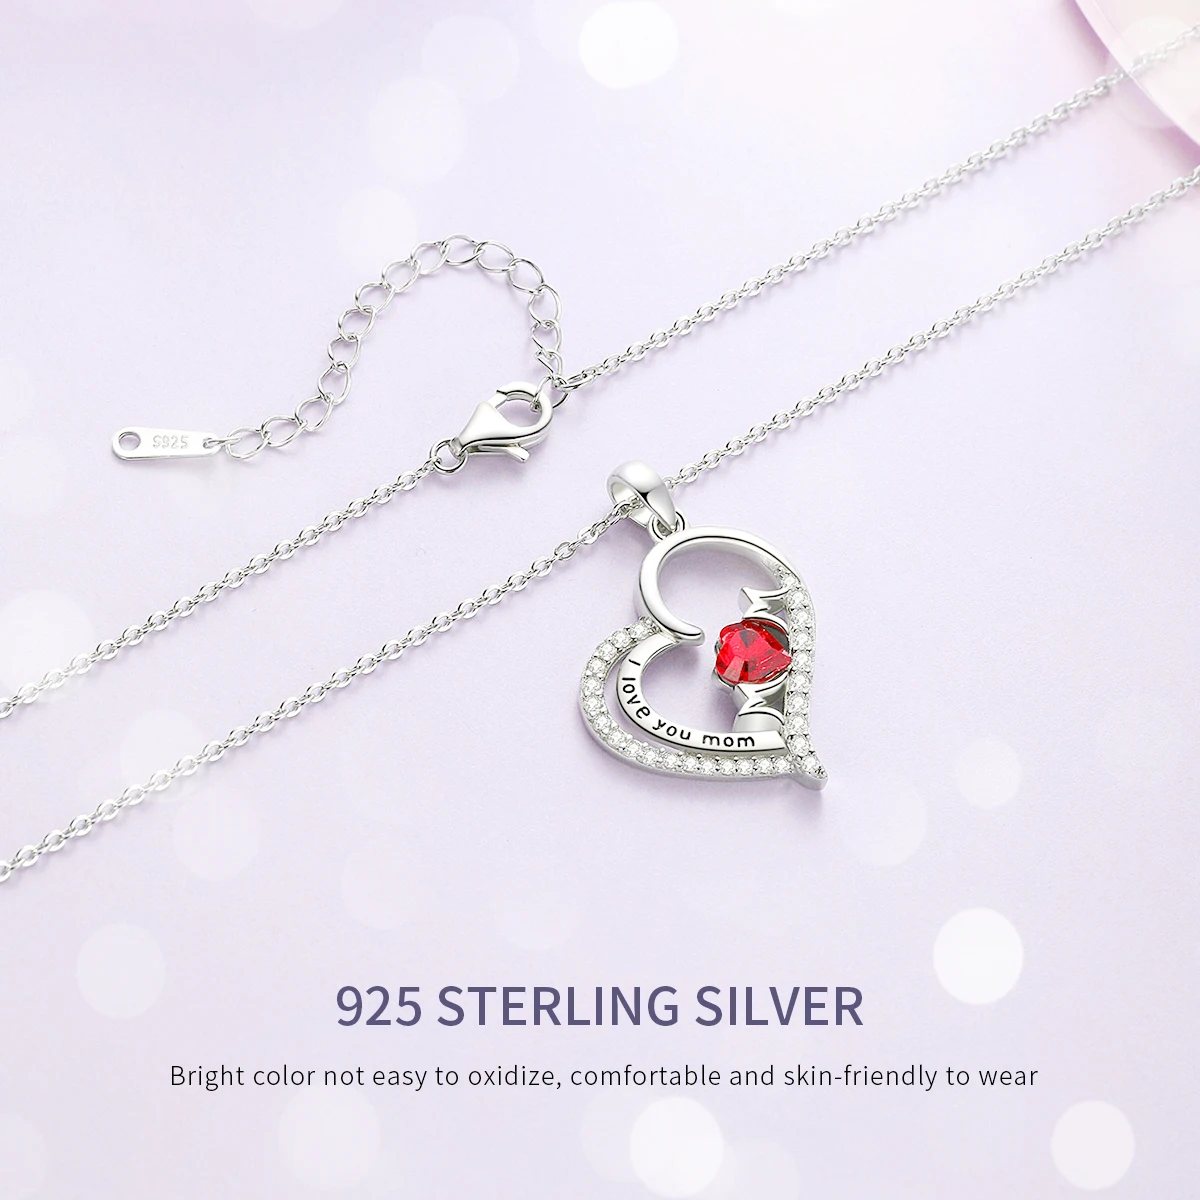 CDE YN1078 Fine Jewelry 925 Silver Necklace Heart-Shaped Pendant Necklace Austrian Crystal Plata De Collar Heart Mom Necklace